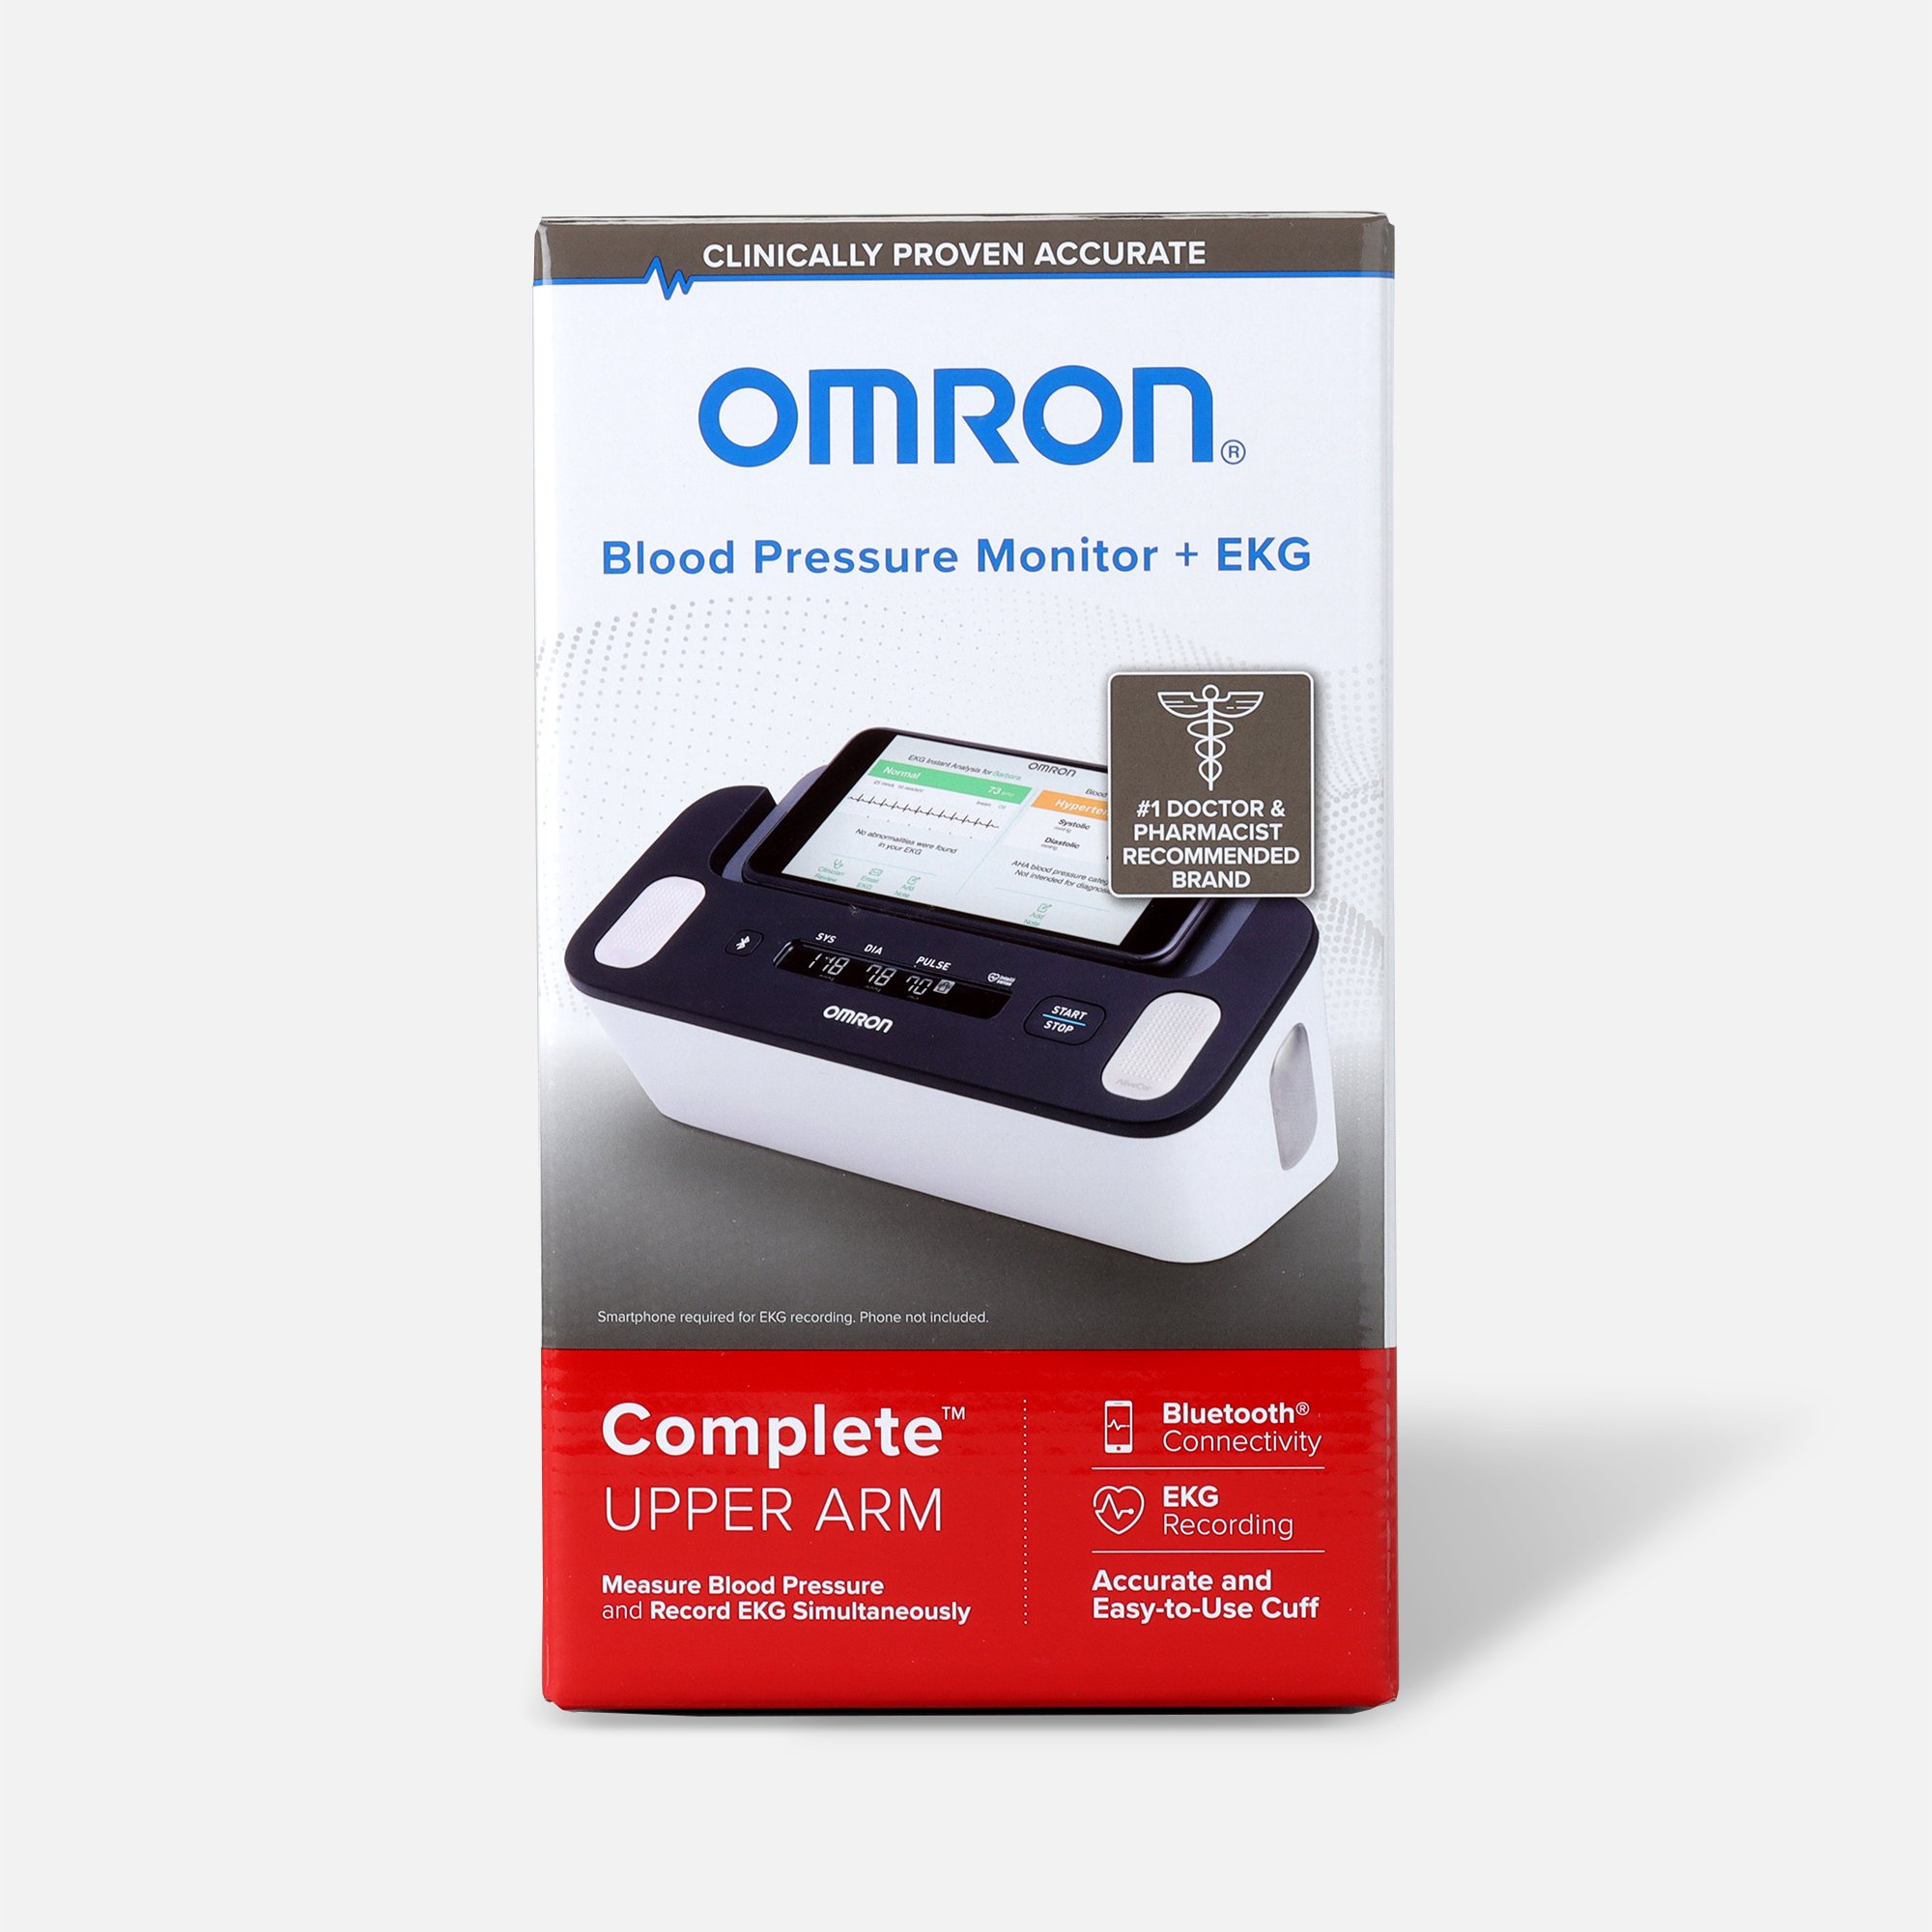 Omron Blood Pressure Monitors